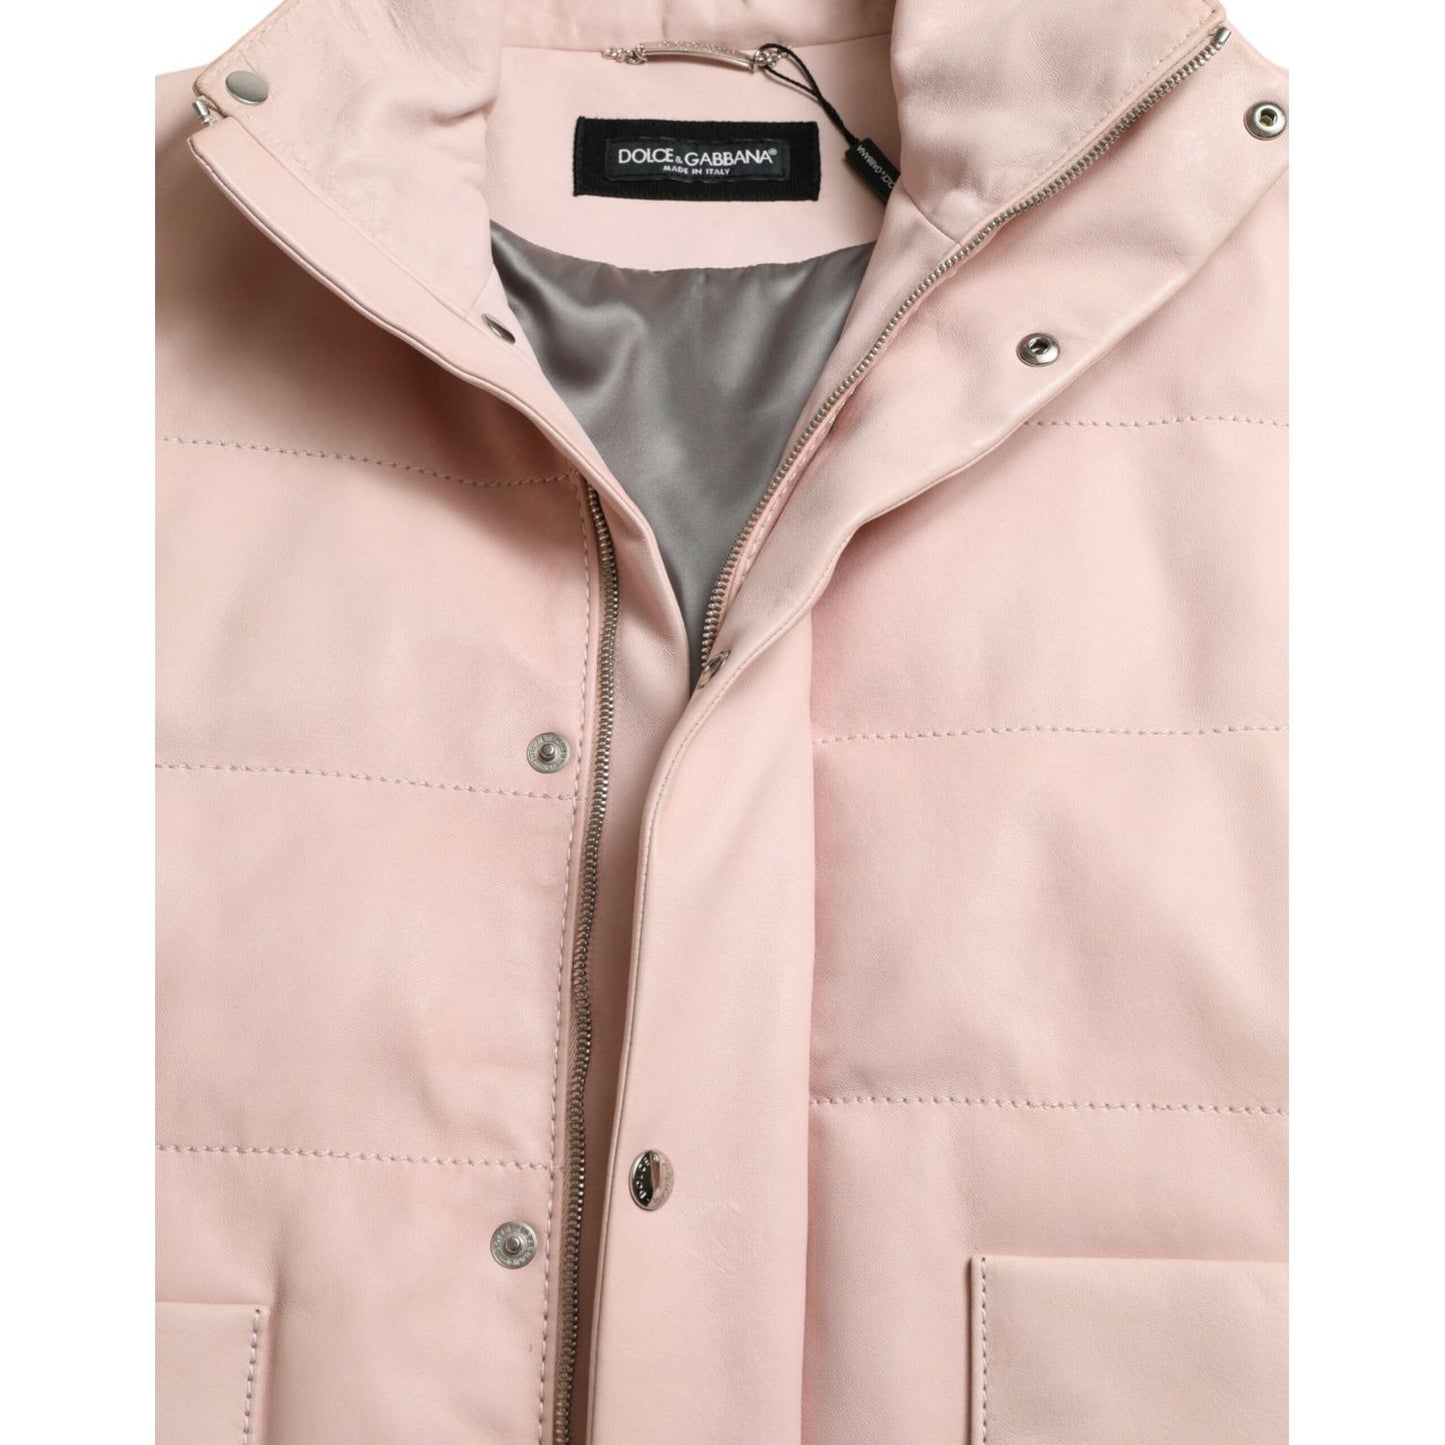 Dolce & Gabbana Chic Pink Puffer Jacket with Sleek Design pink-nylon-men-turtle-neck-puffer-jacket